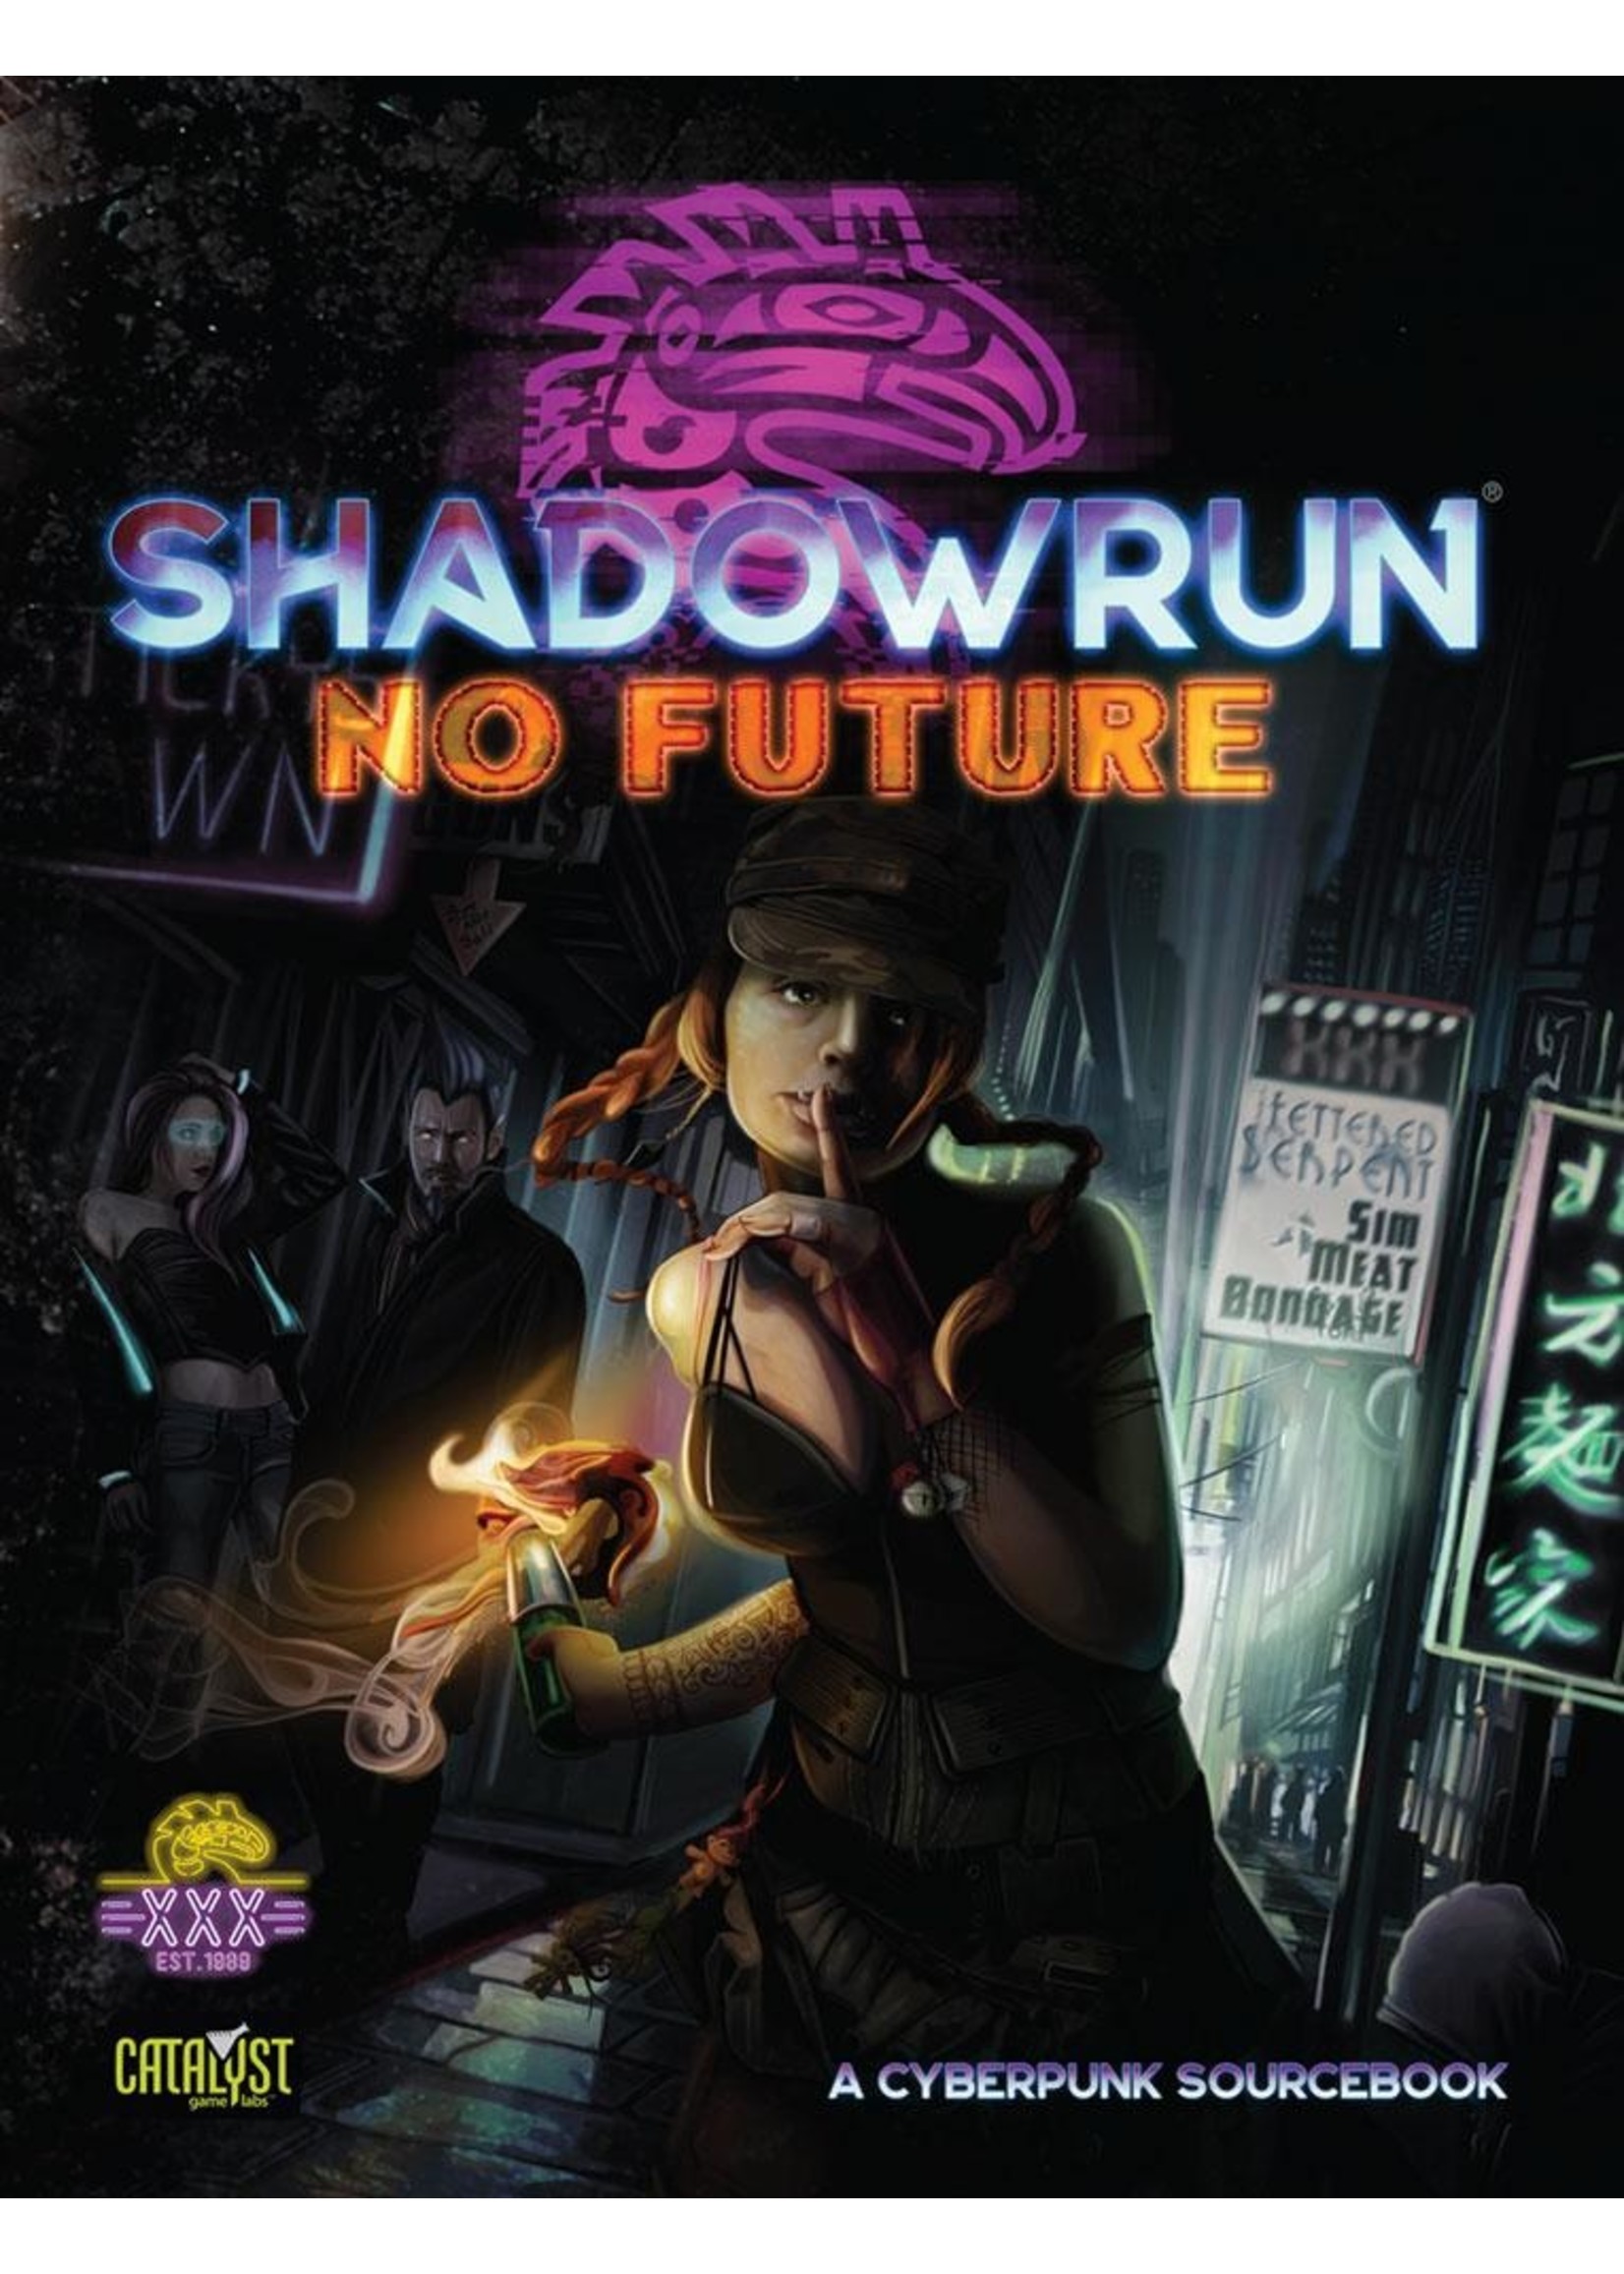 Shadowrun Sexto Mundo- Livro Básico - Portal RPG e Jogos